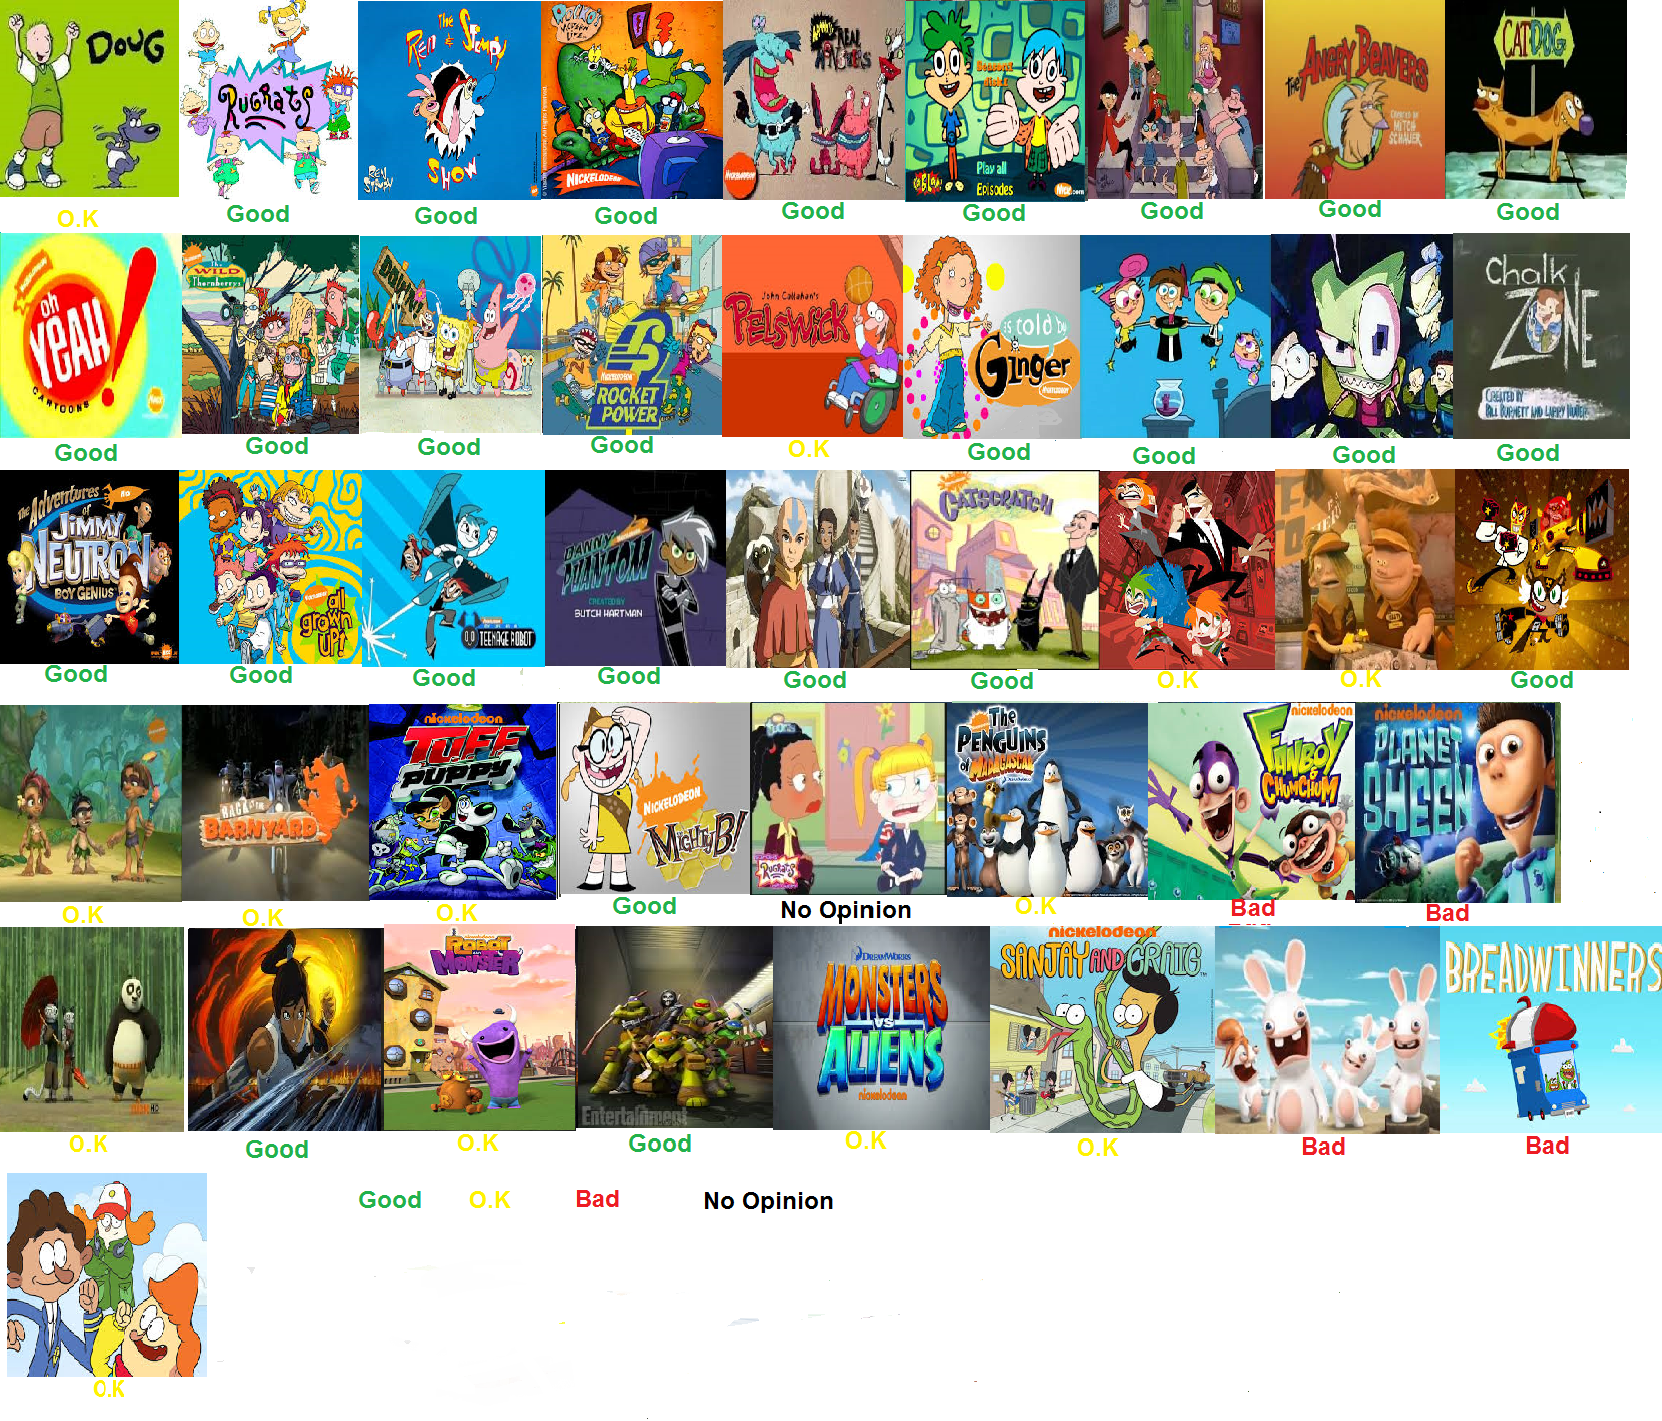 Nicktoons Nickelodeon Cartoons